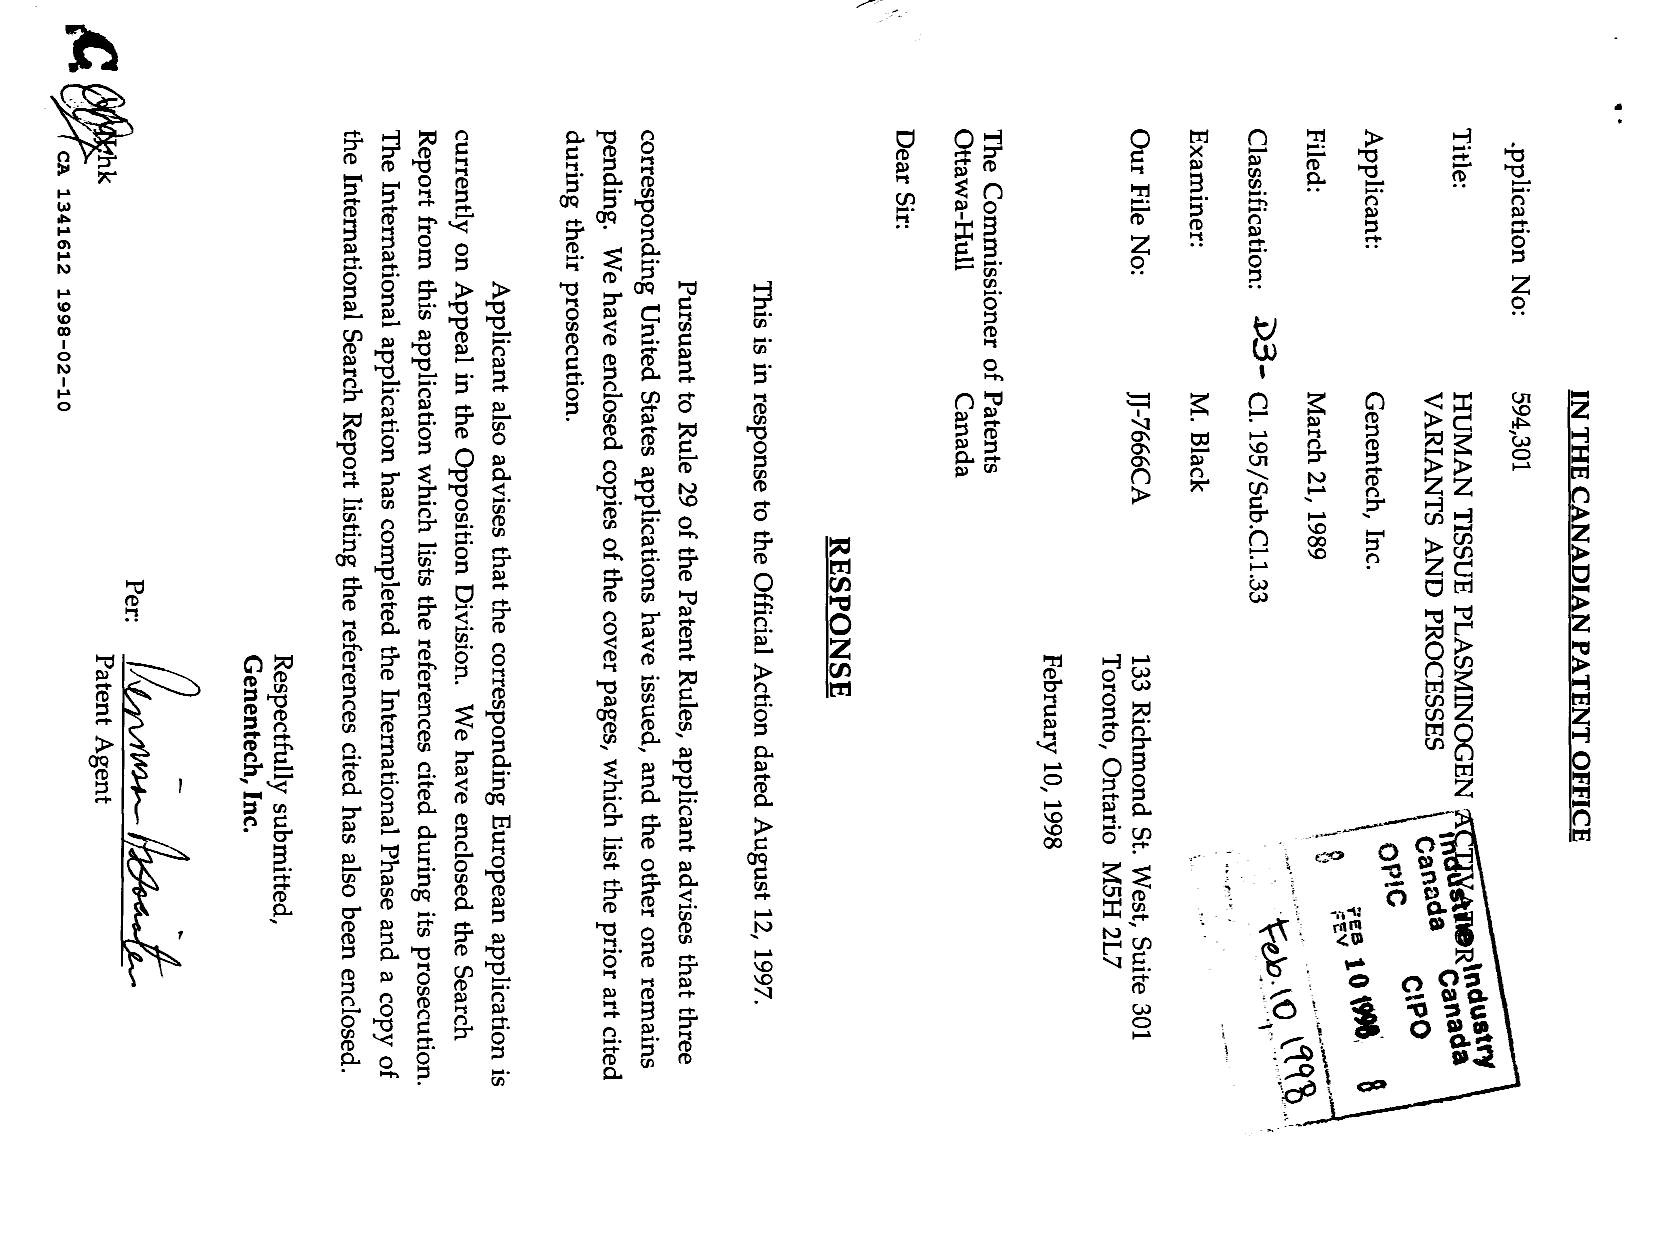 Canadian Patent Document 1341612. Prosecution Correspondence 19980210. Image 1 of 26